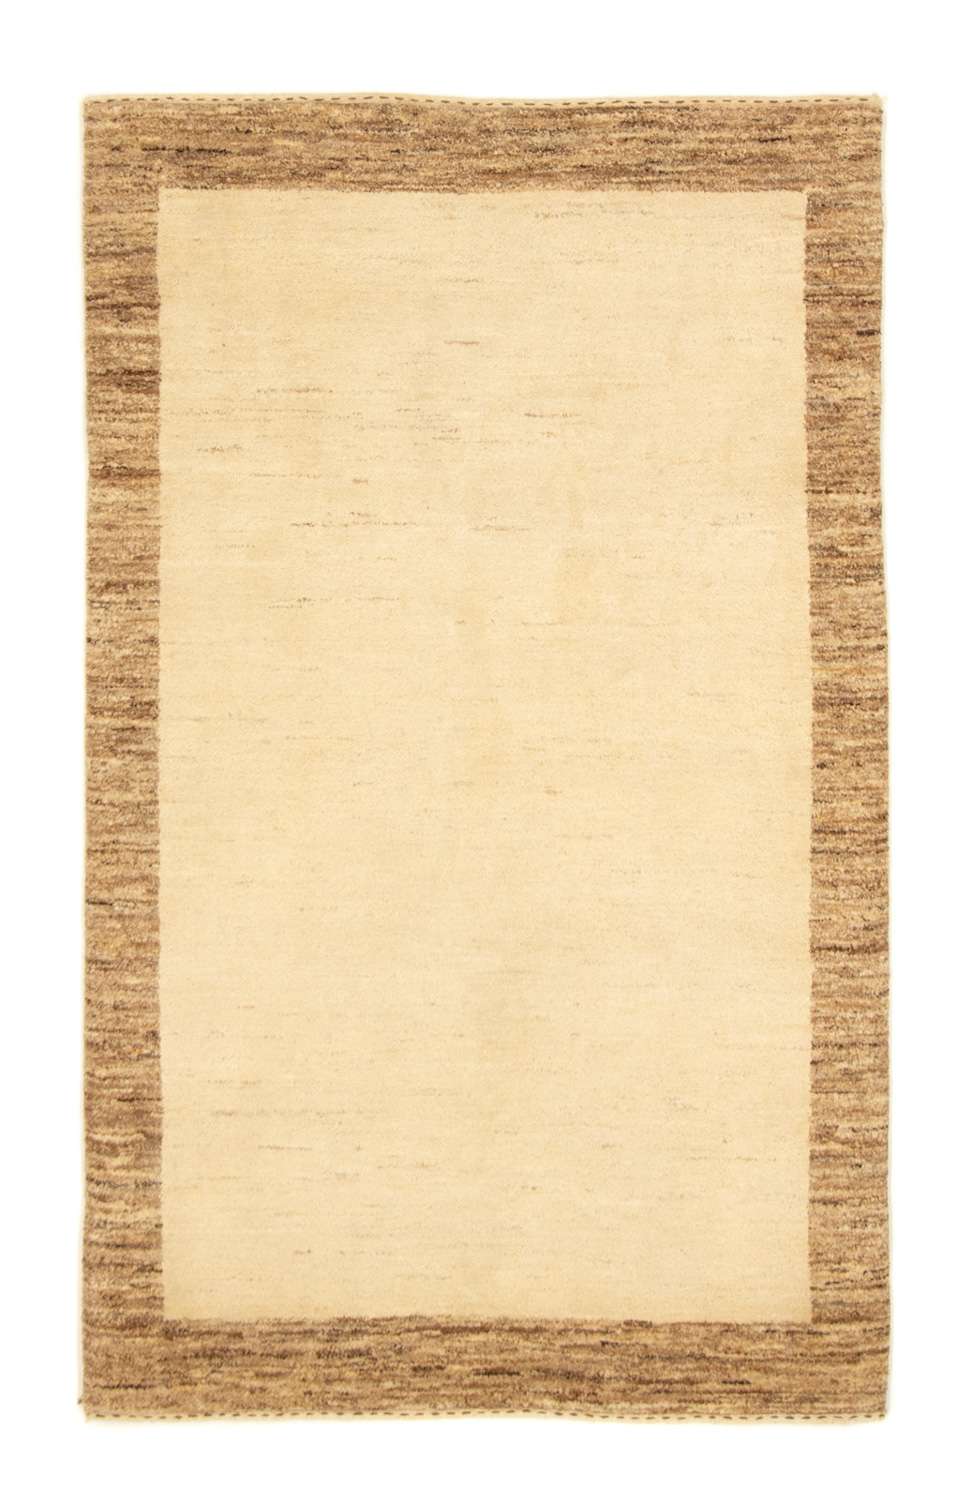 Gabbeh tapijt - Indus - 160 x 100 cm - beige